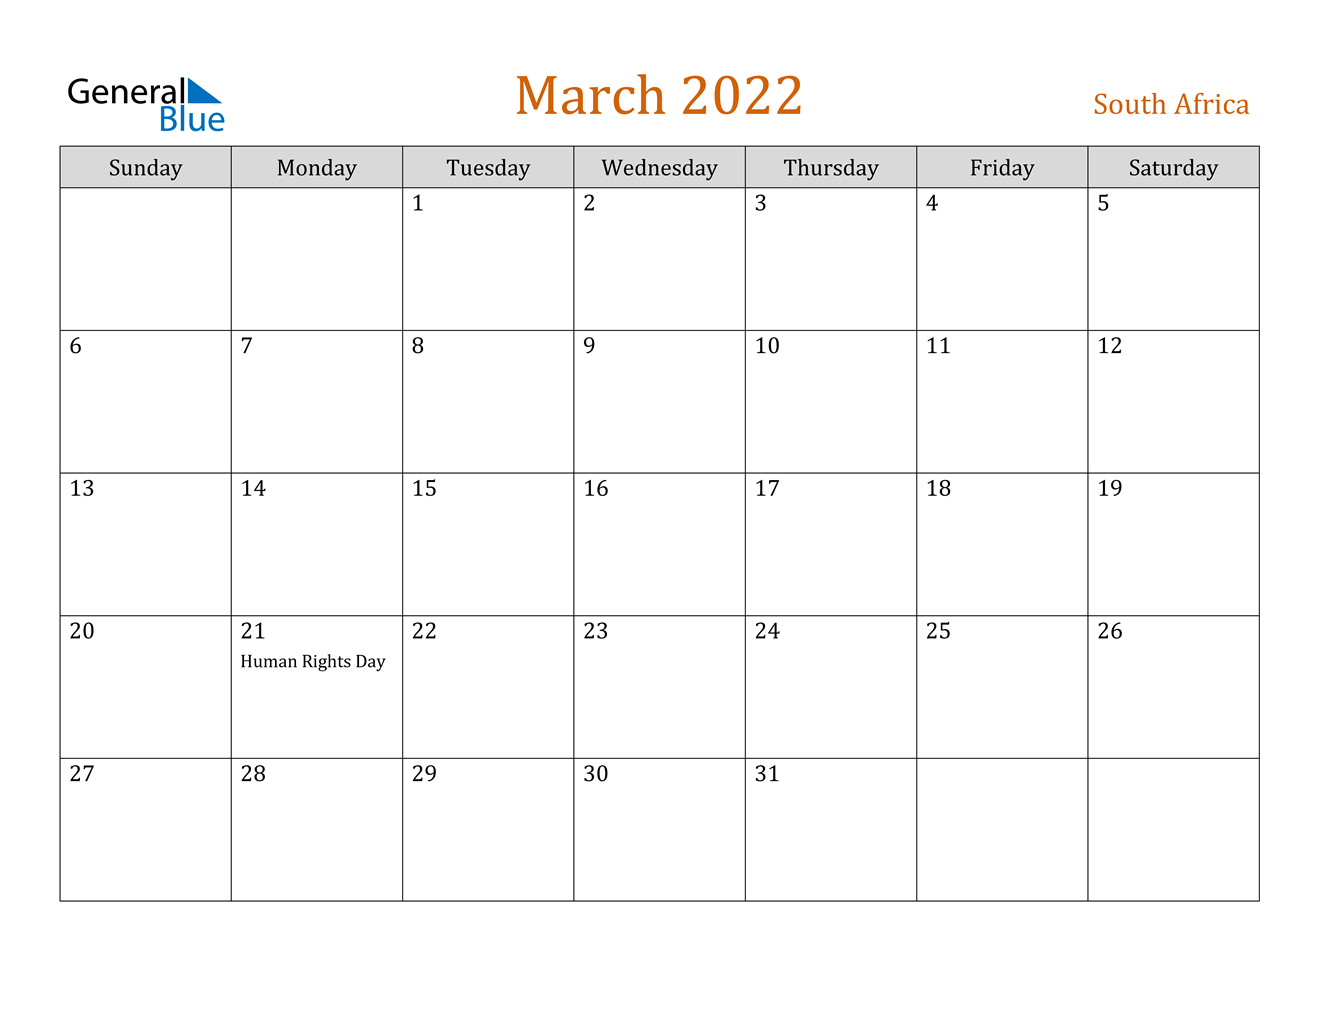 March 2022 Calendar - South Africa